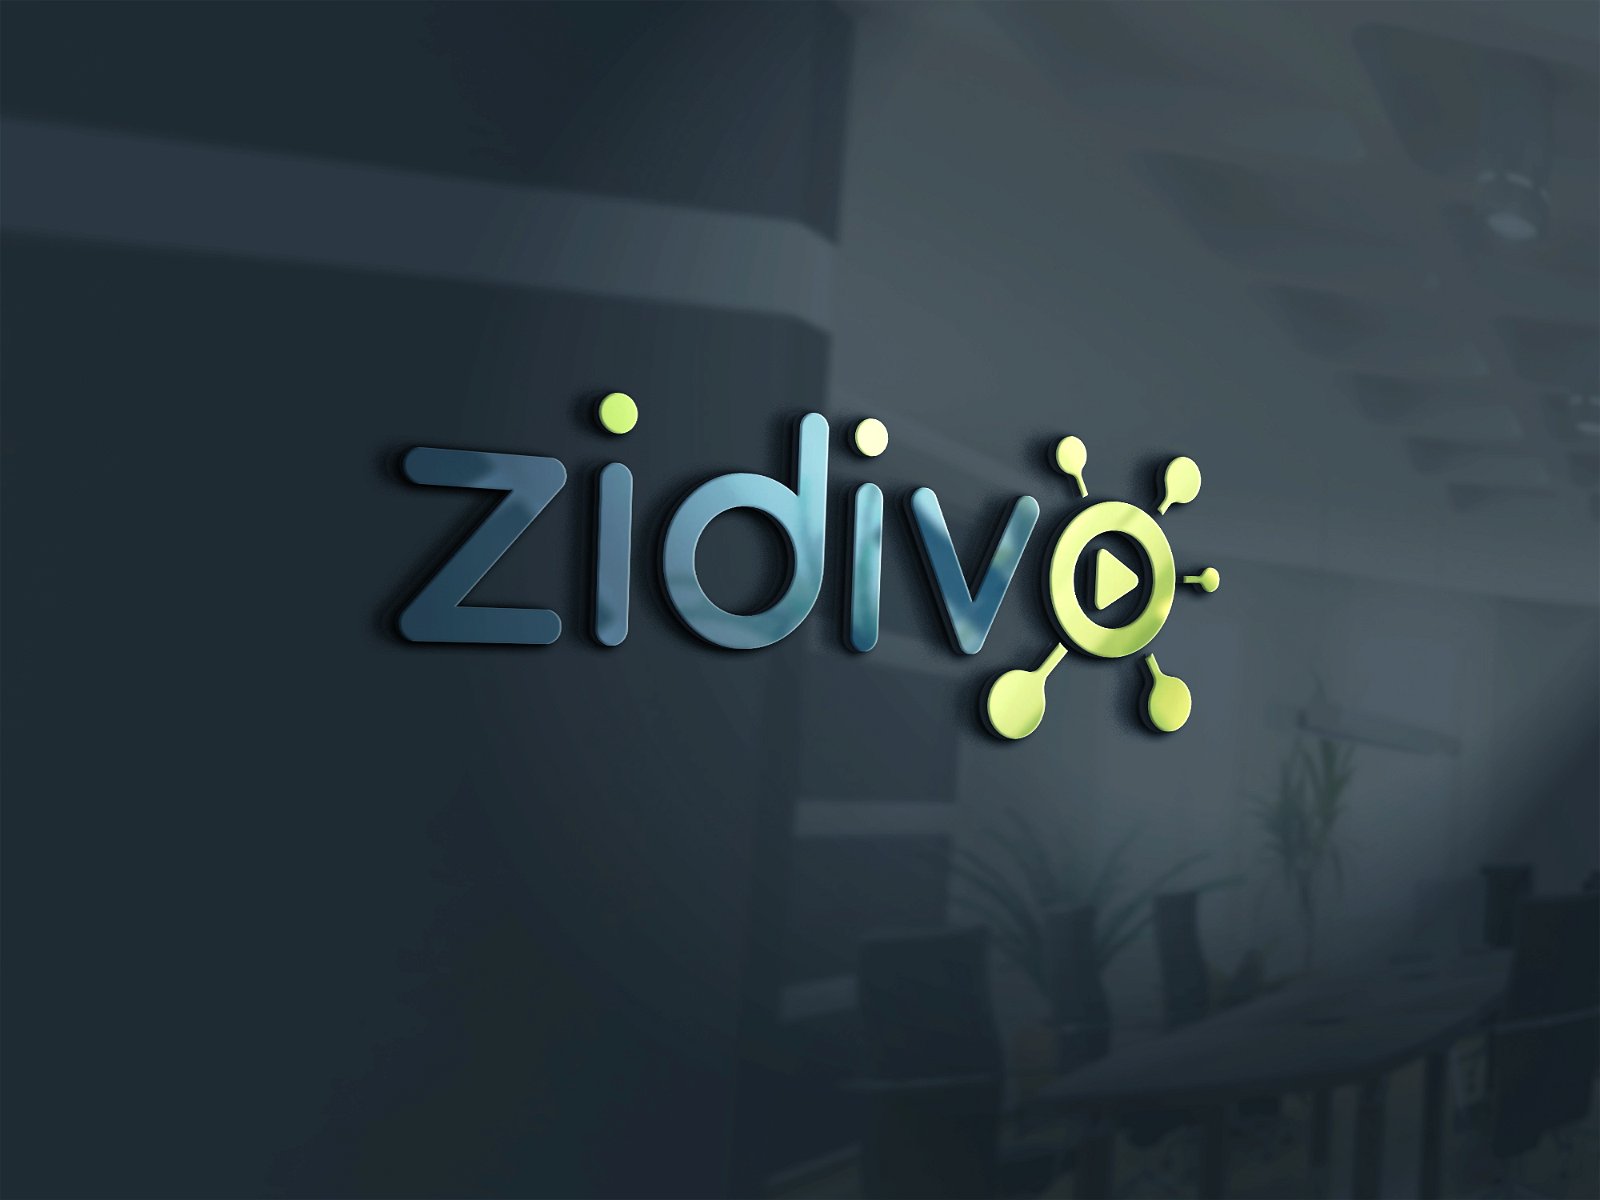 Zidivo - Video Streaming Platform